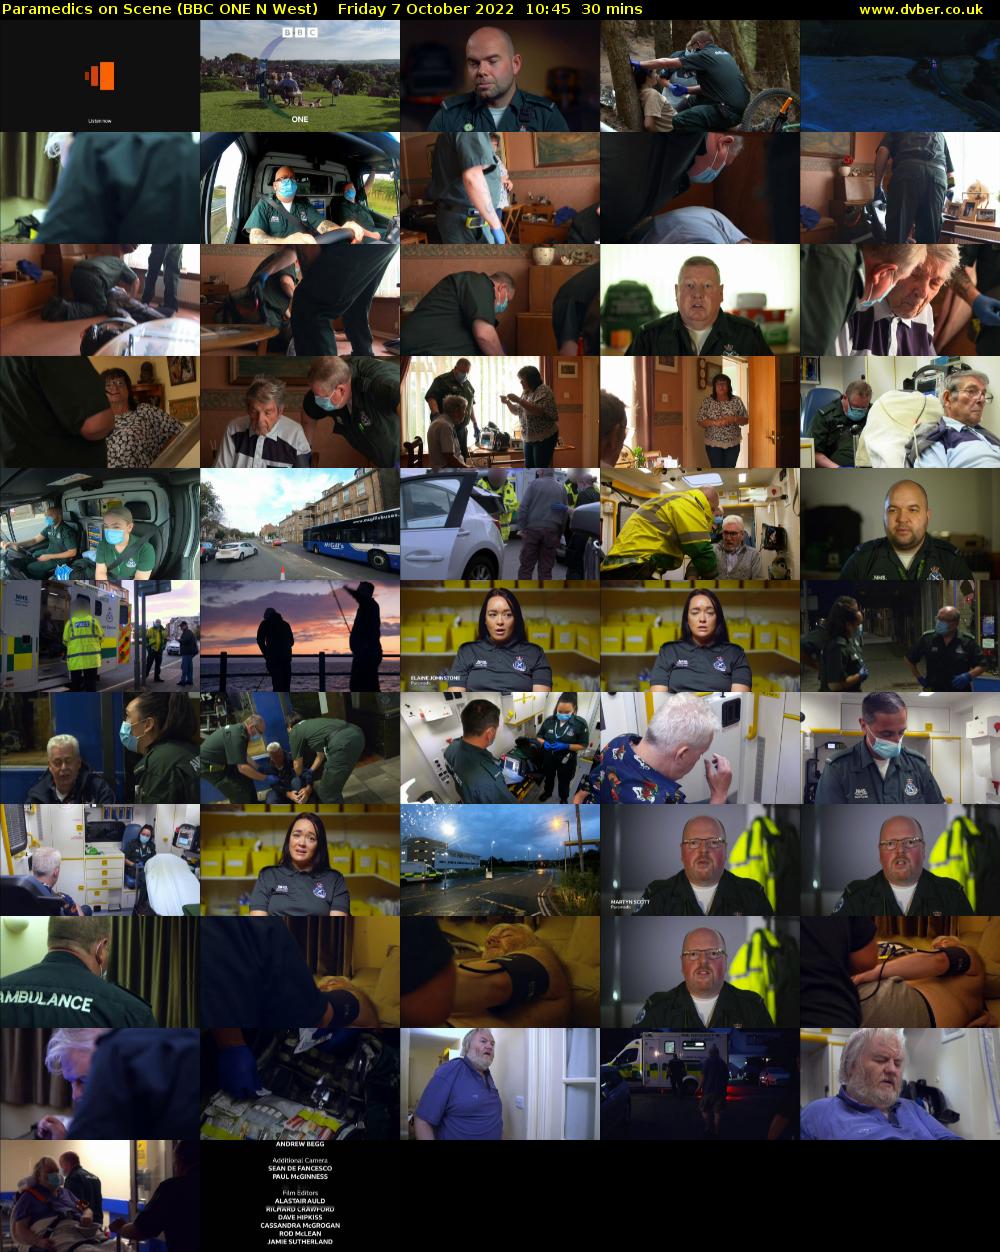 Paramedics on Scene (BBC ONE N West) Friday 7 October 2022 10:45 - 11:15